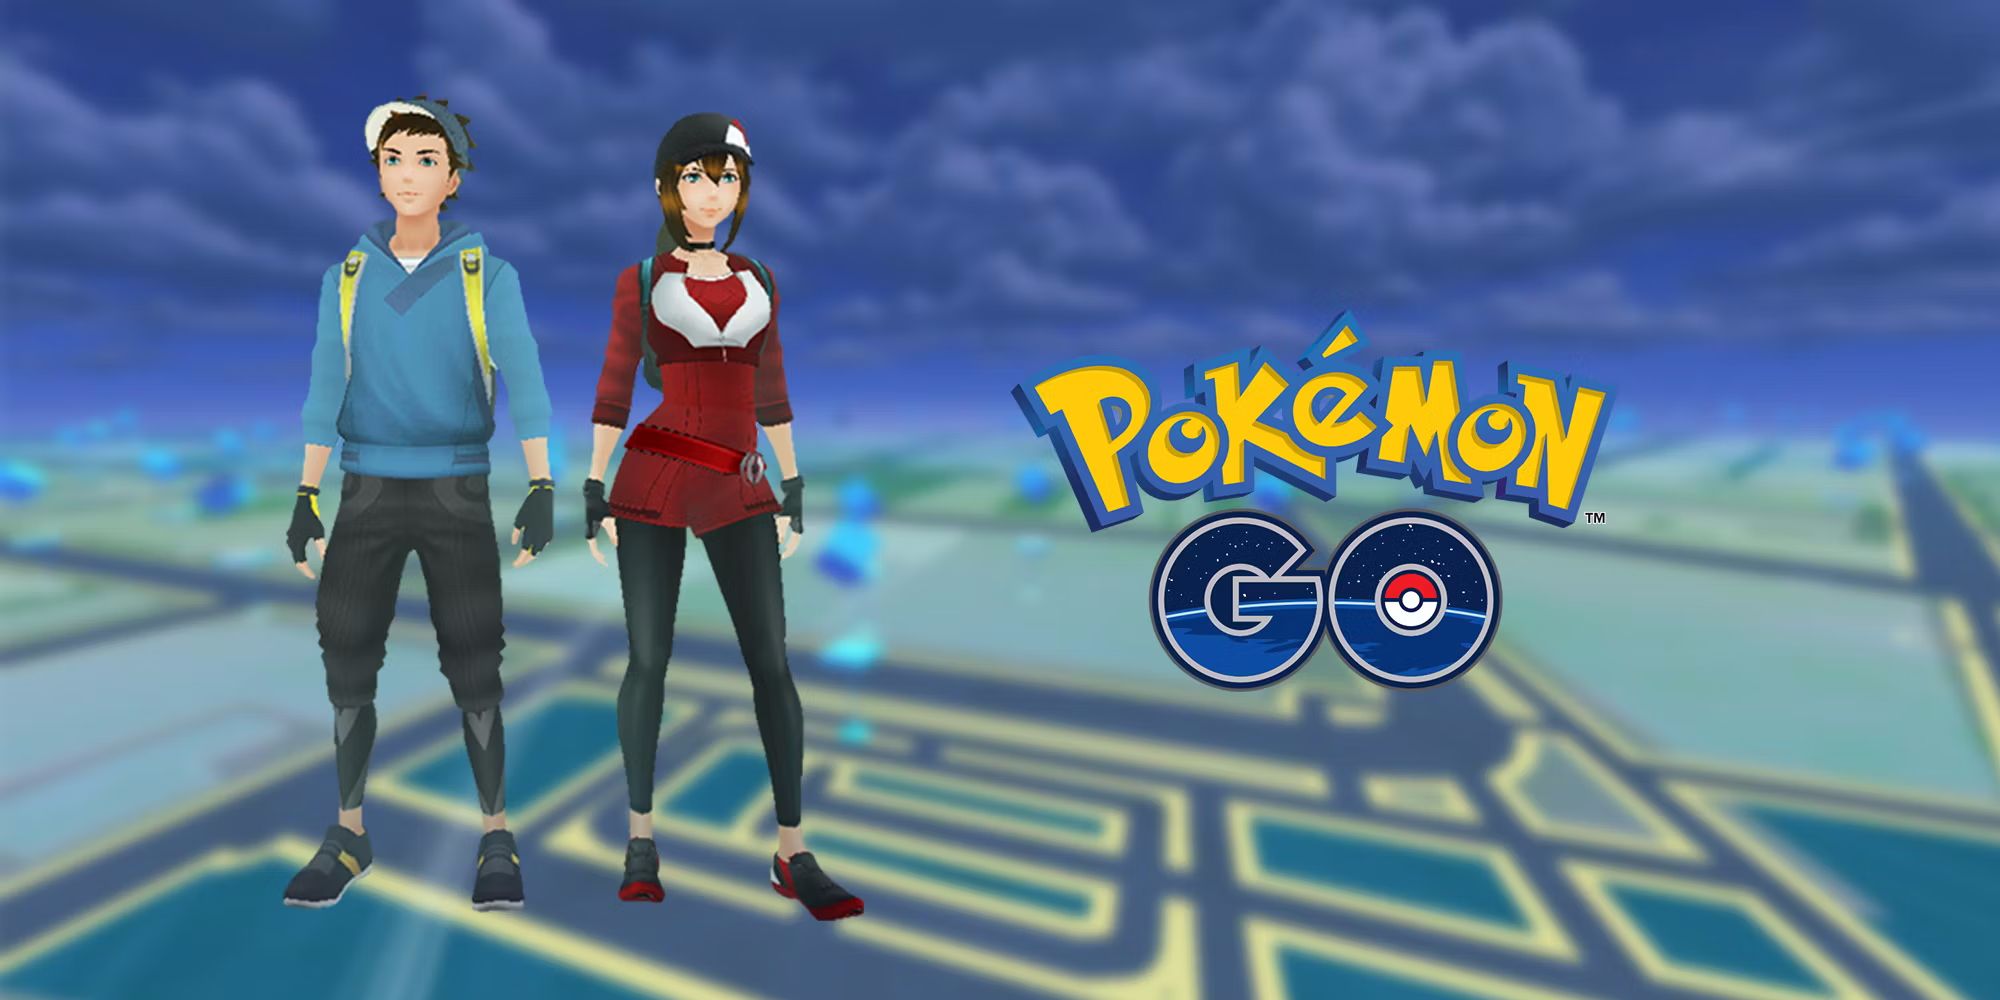 Two Pokemon Go Trainers standing next to the Pokemon Go logo